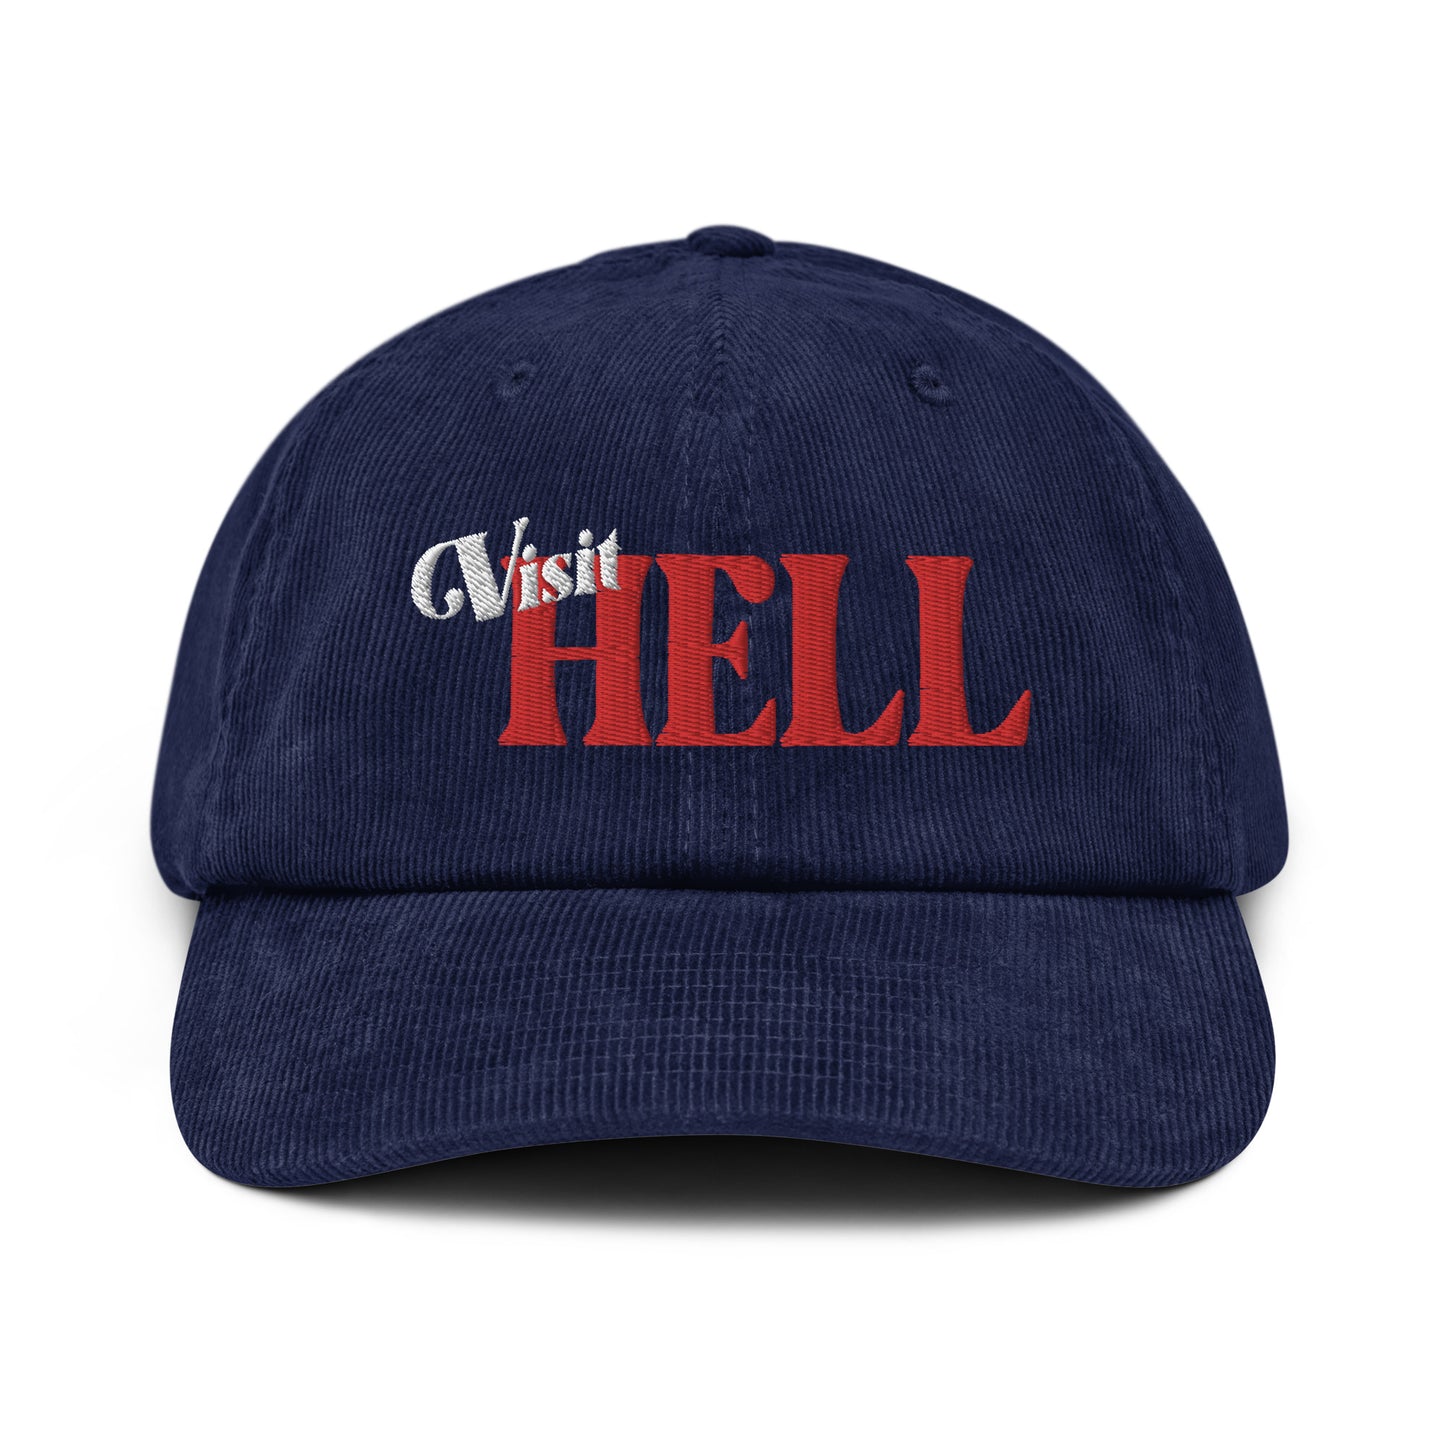 Visit Hell corduroy hat